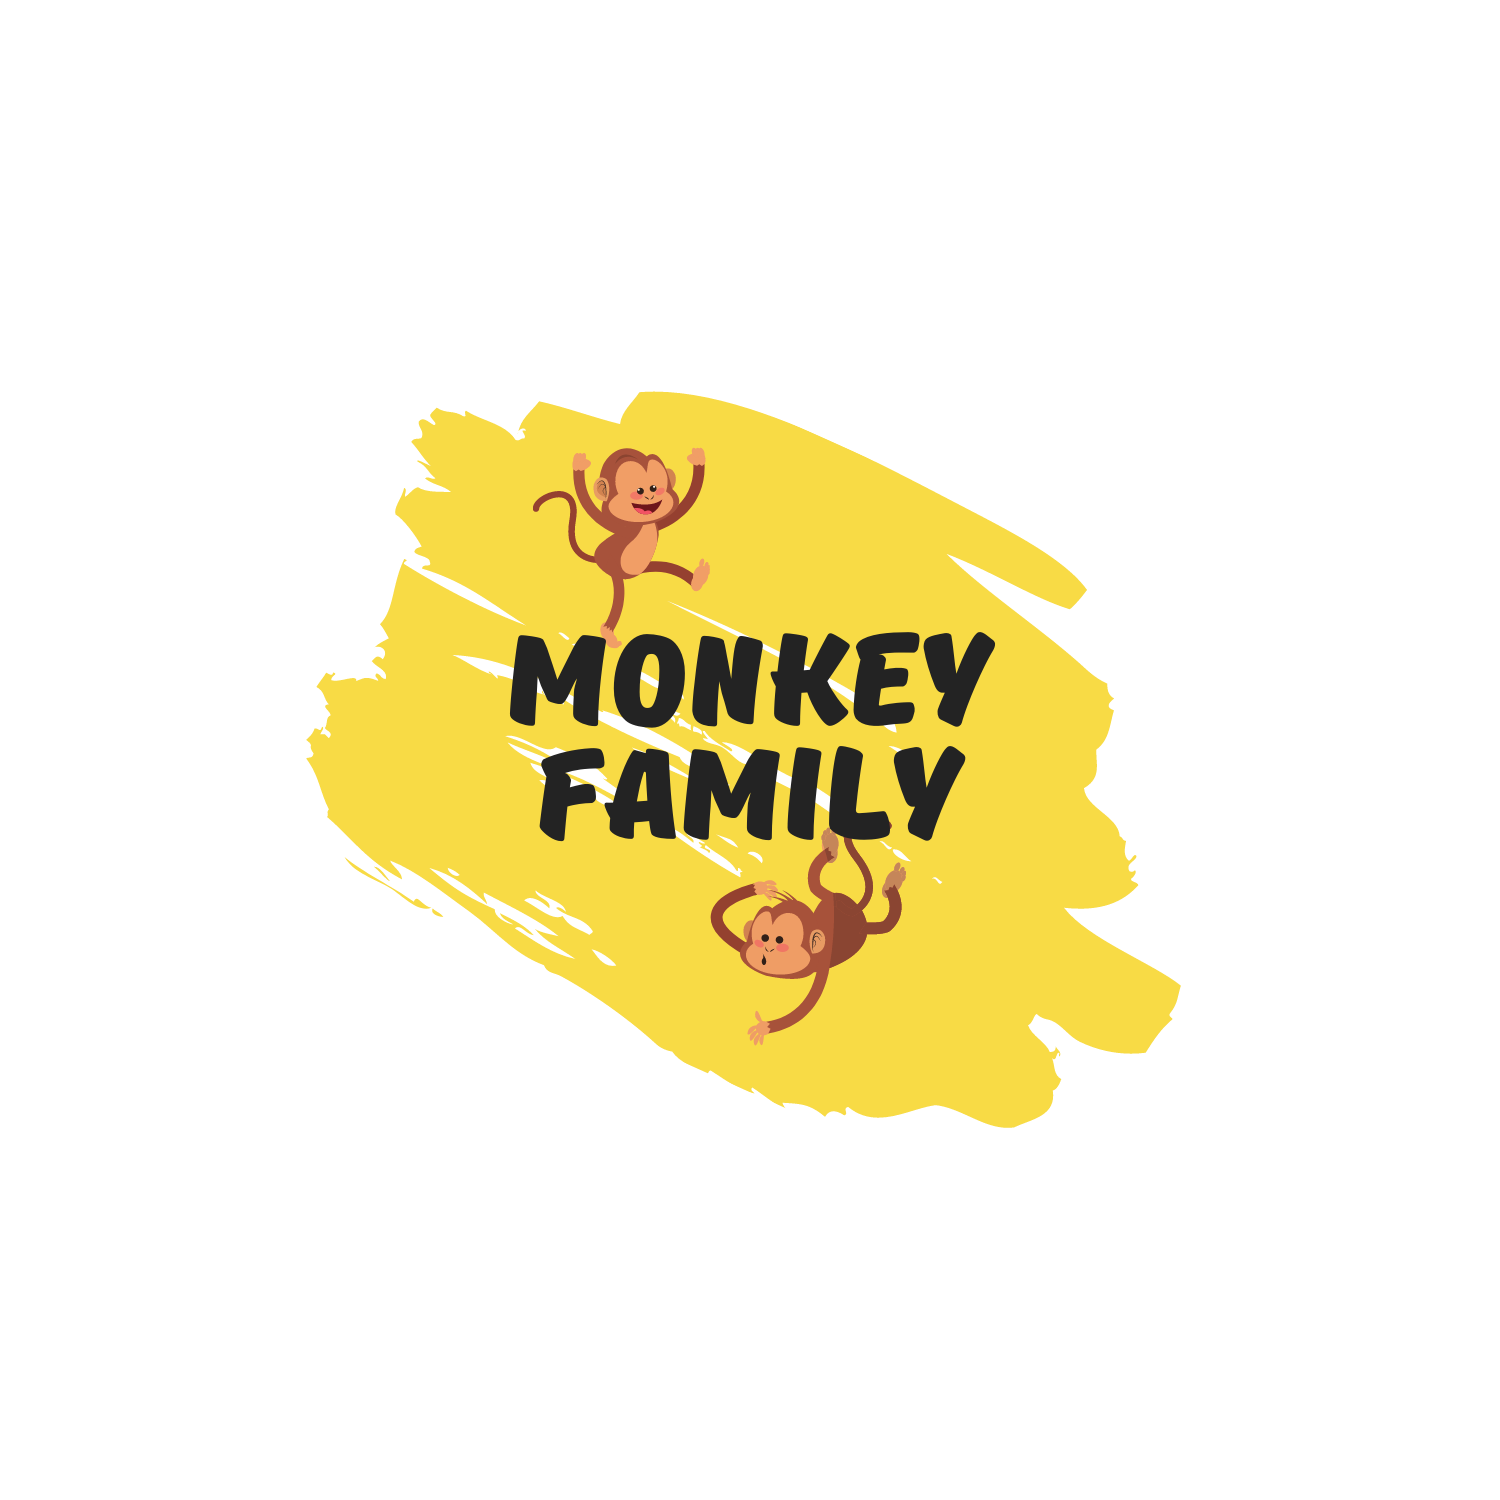   Monkey Family    